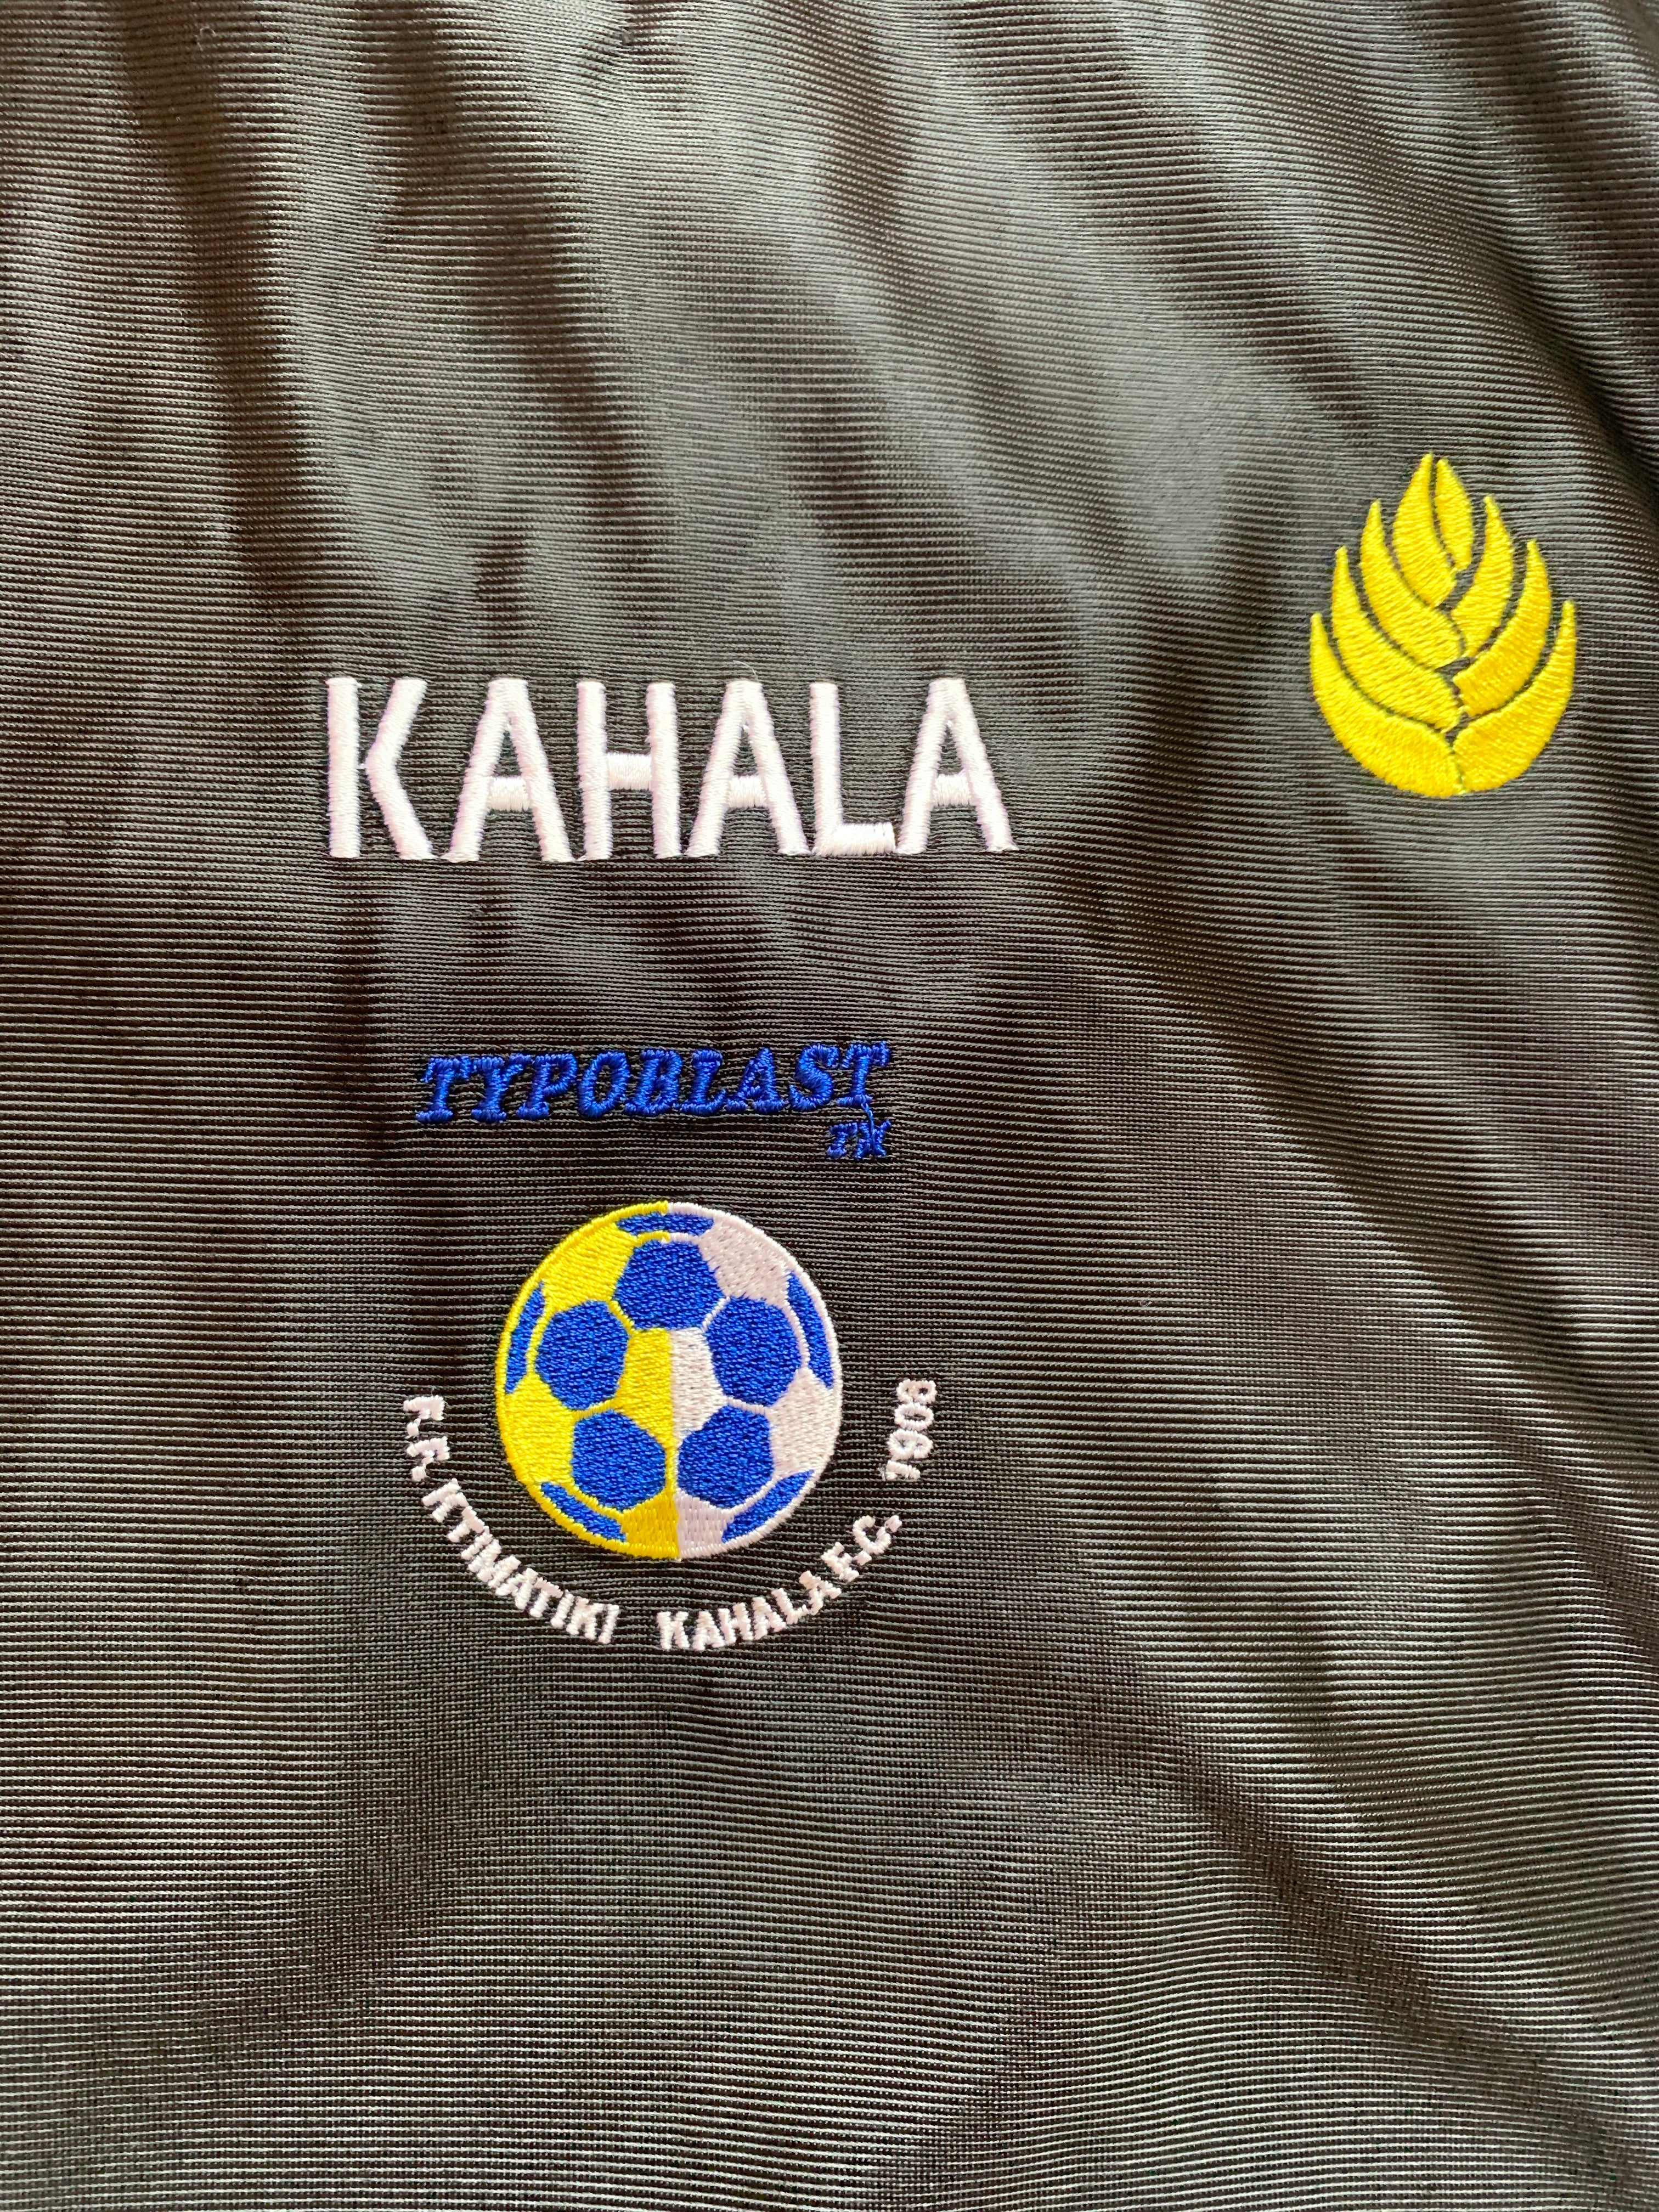 2000/02 Kahala Ktimatiki Away Shirt (XL) BNWT